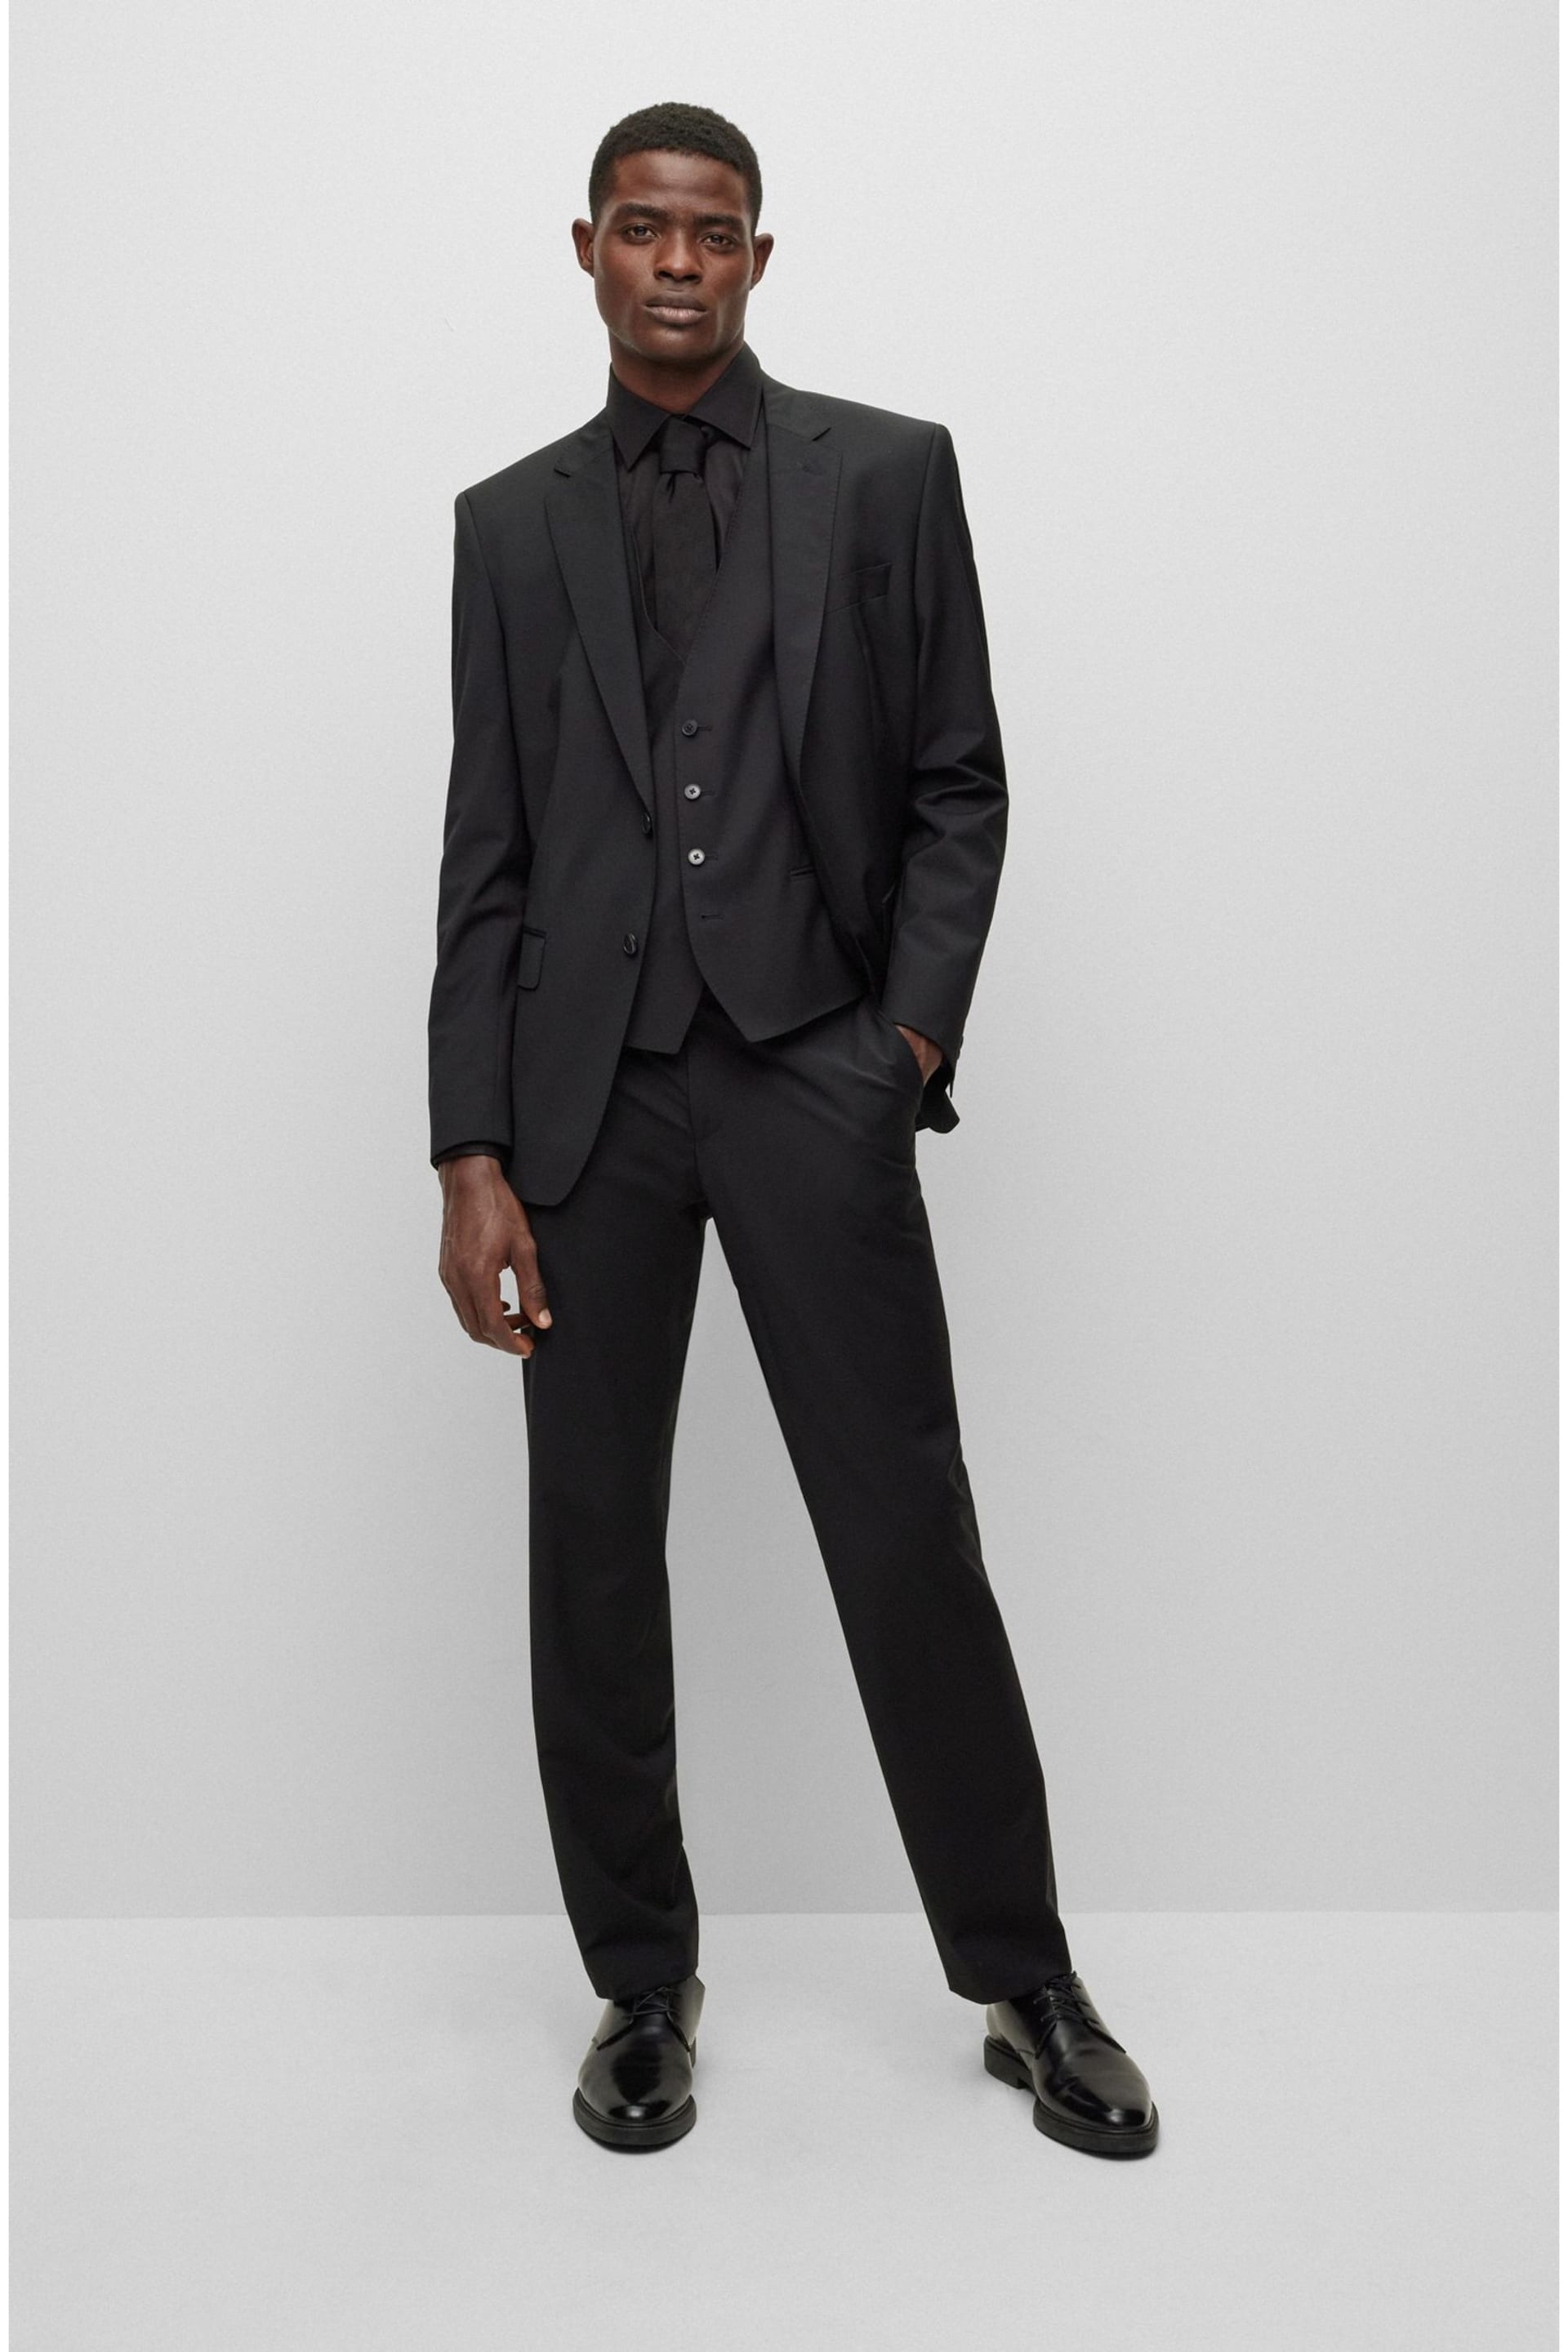 BOSS Black Slim Fit Suit: Jacket - Image 1 of 5